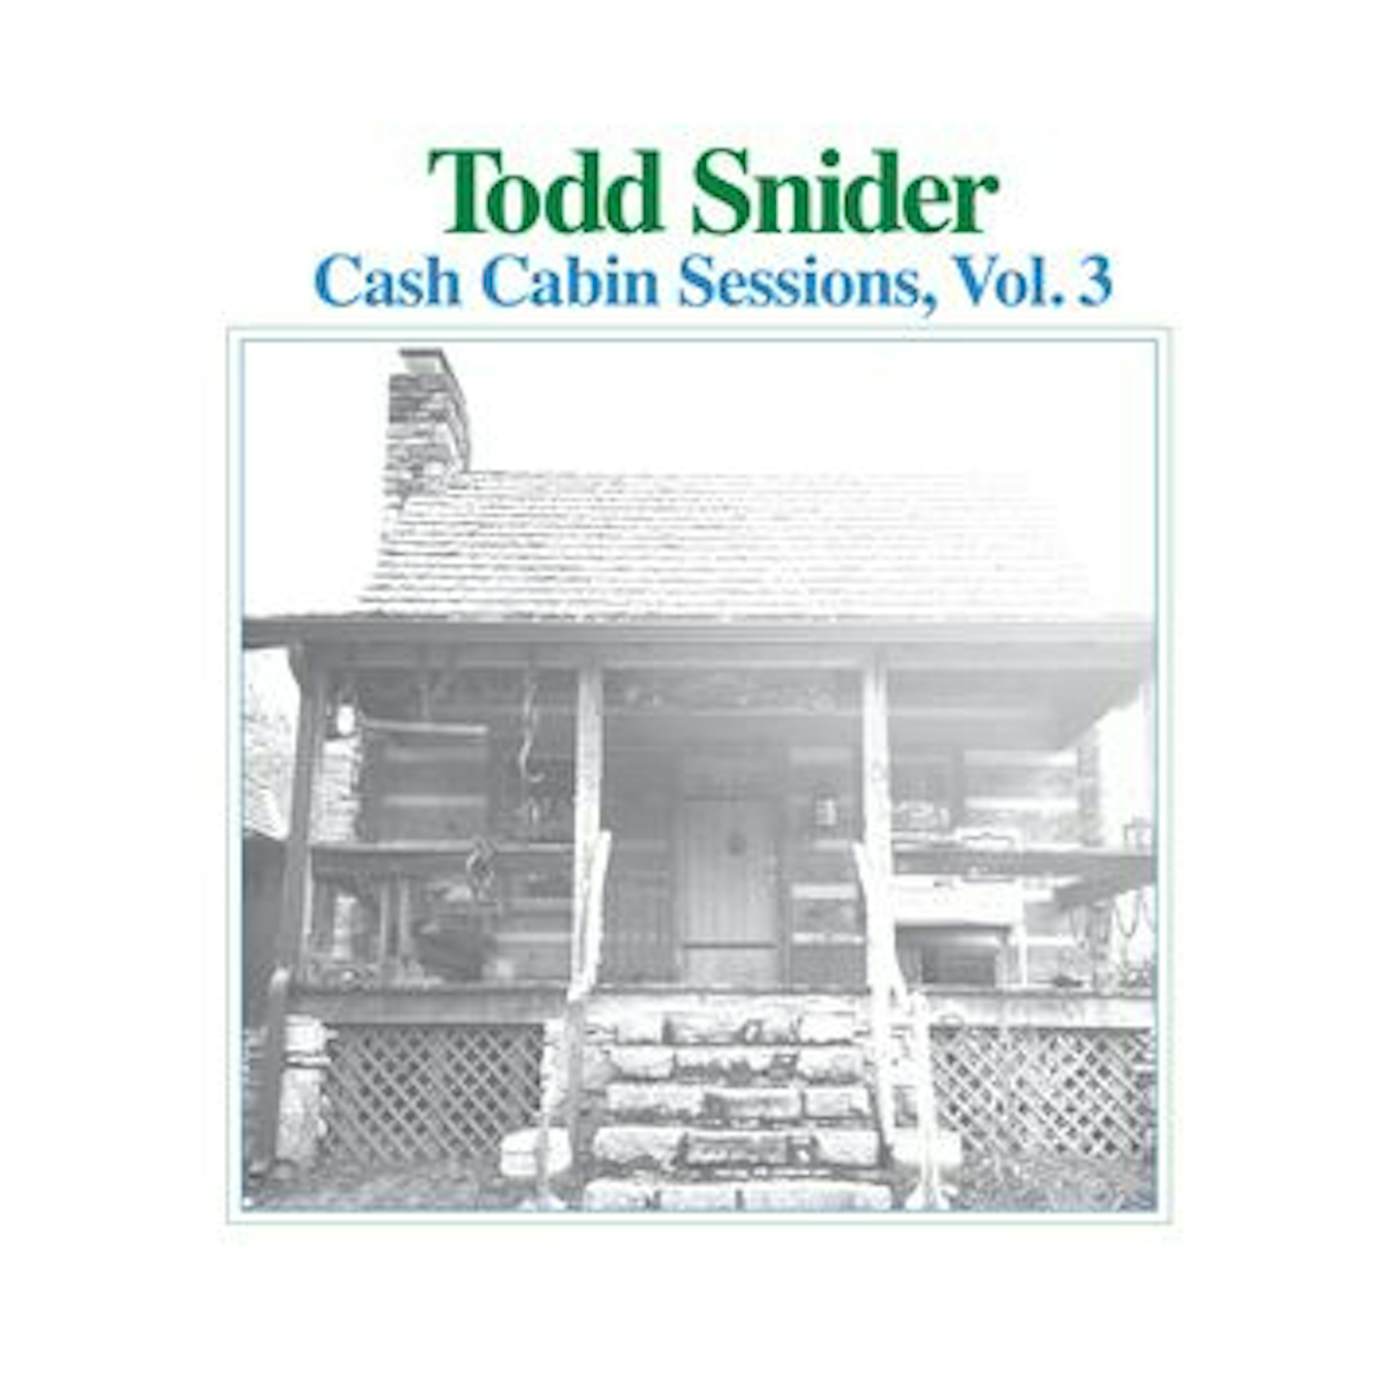 Todd Snider Cash Cabin Sessions, Vol. 3 Vinyl Record